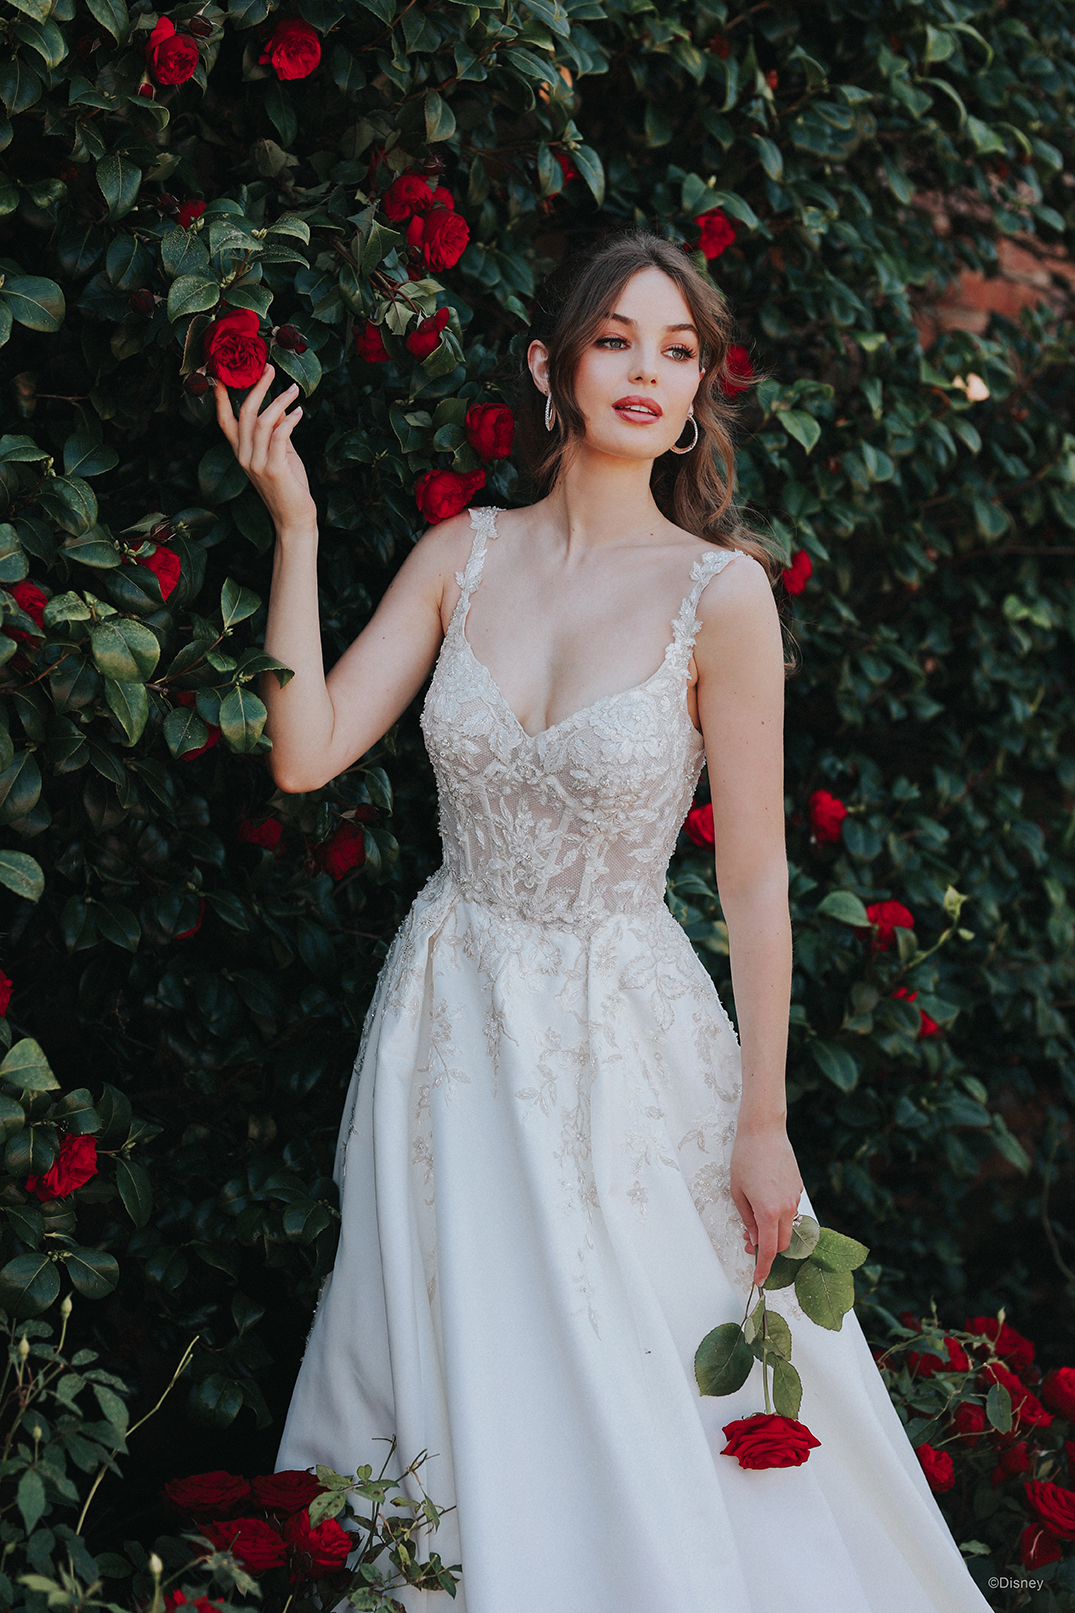 Disney Fairy Tale Weddings - by Allure Bridals at Lisa's Bridal